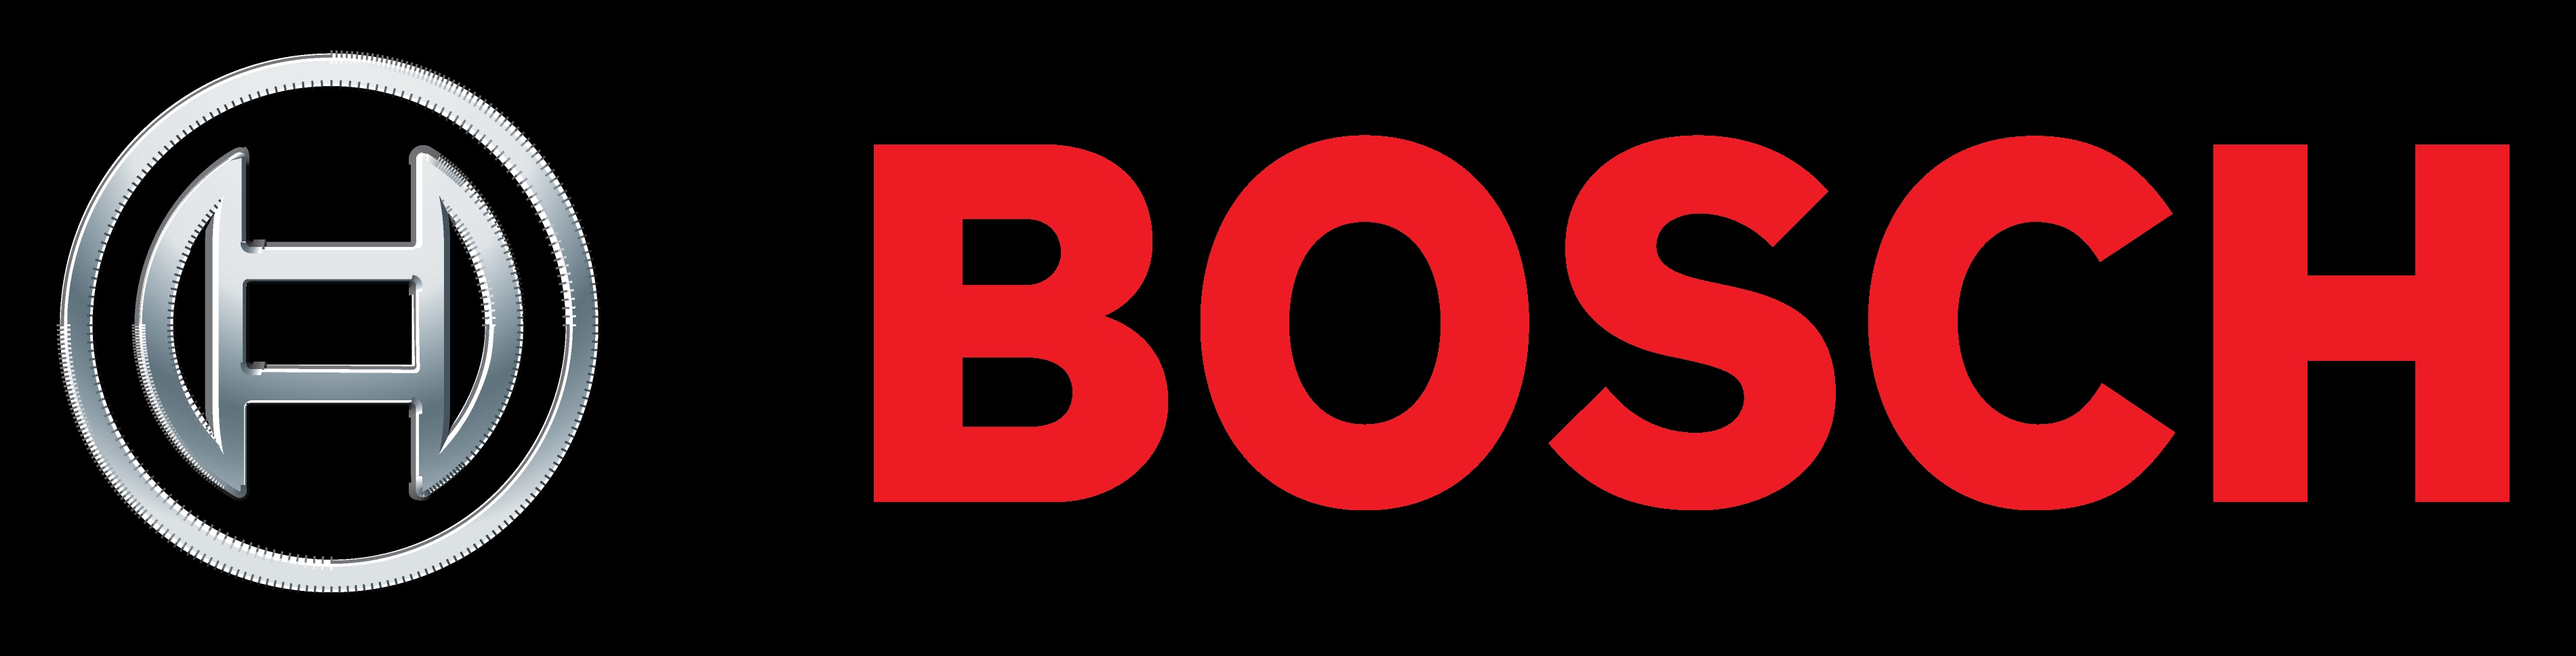 bosch-logo-black